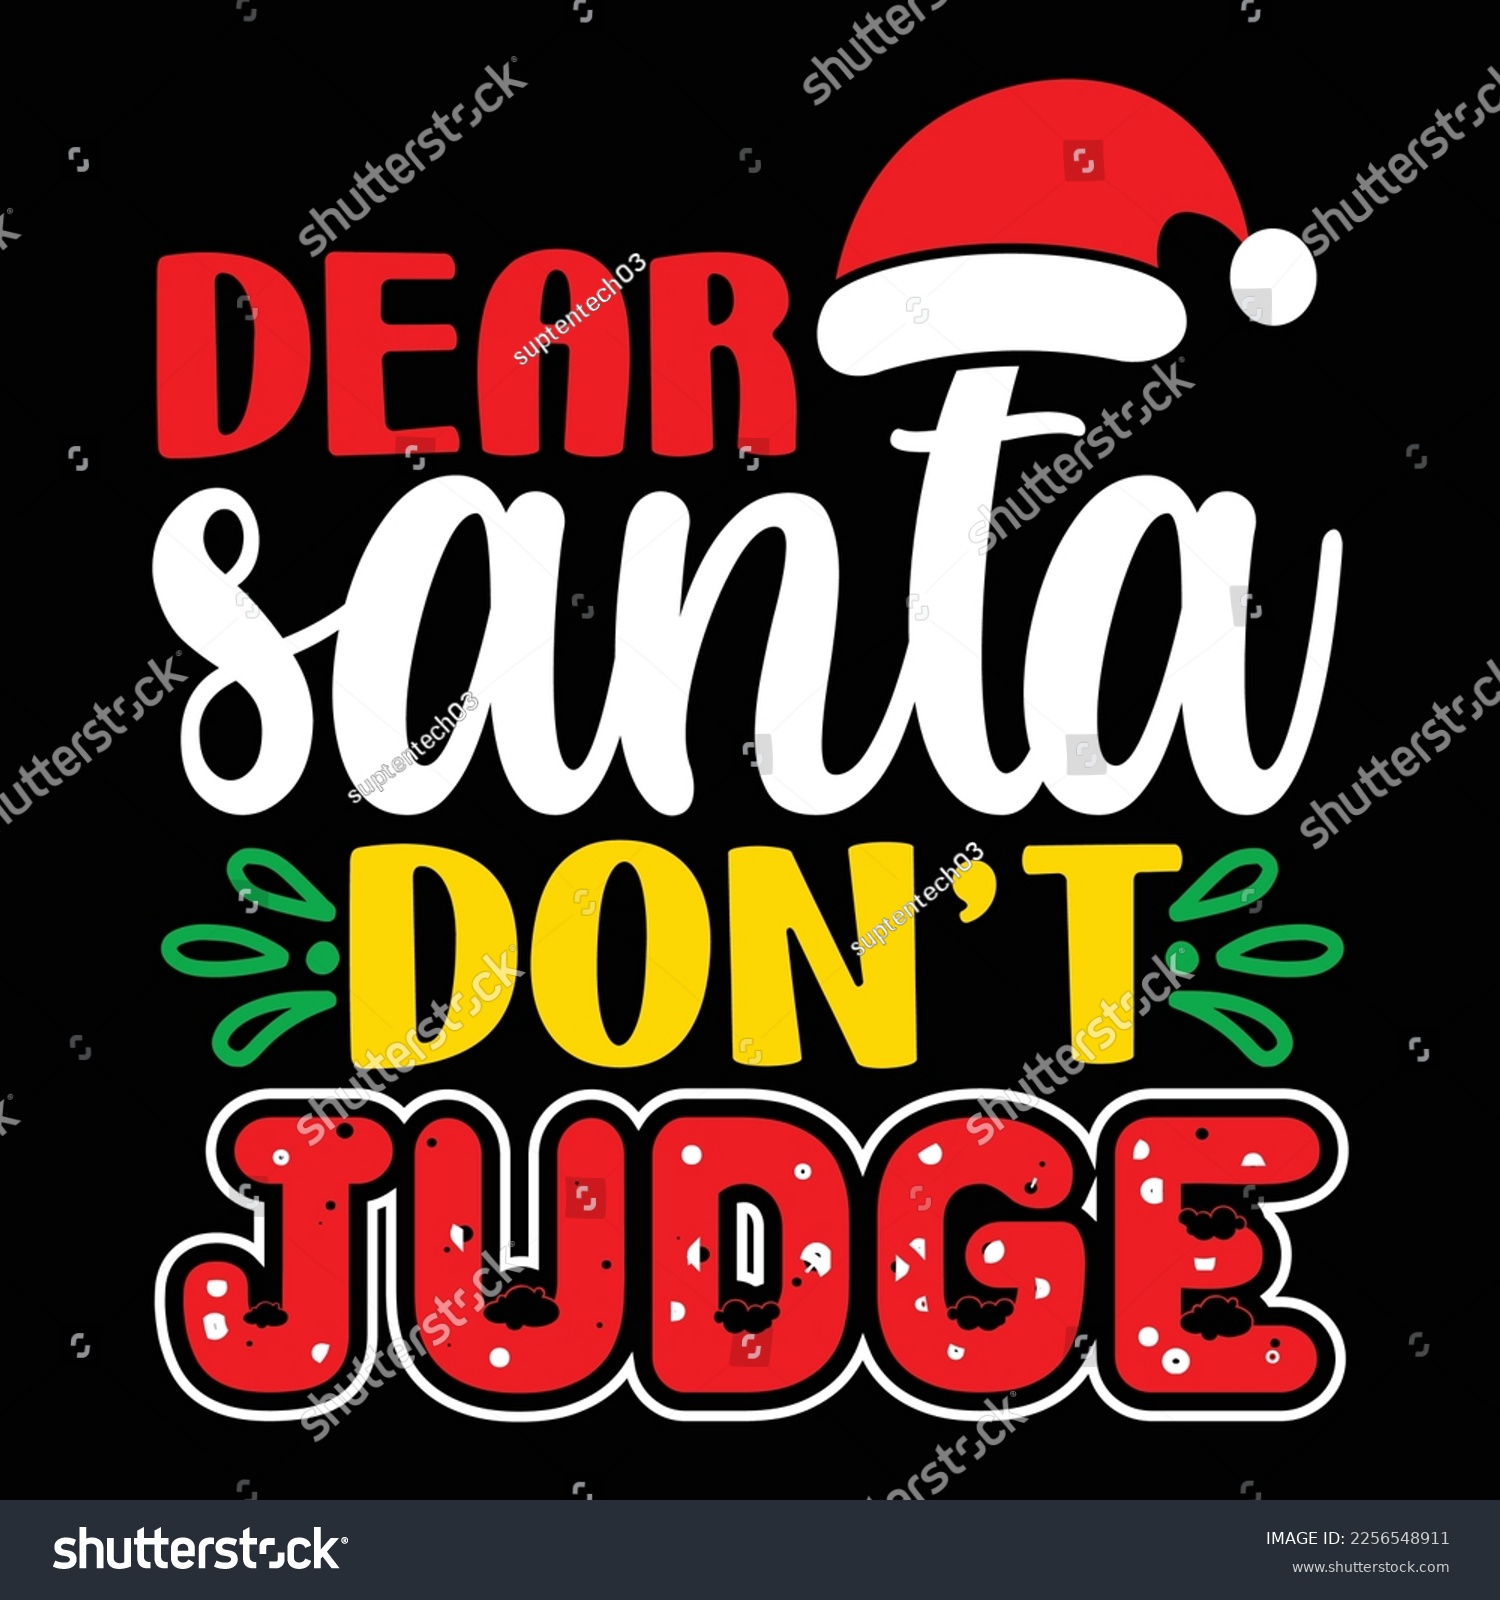 SVG of Dear Santa Don't Judge, Merry Christmas shirts Print Template, Xmas Ugly Snow Santa Clouse New Year Holiday Candy Santa Hat vector illustration for Christmas hand lettered svg